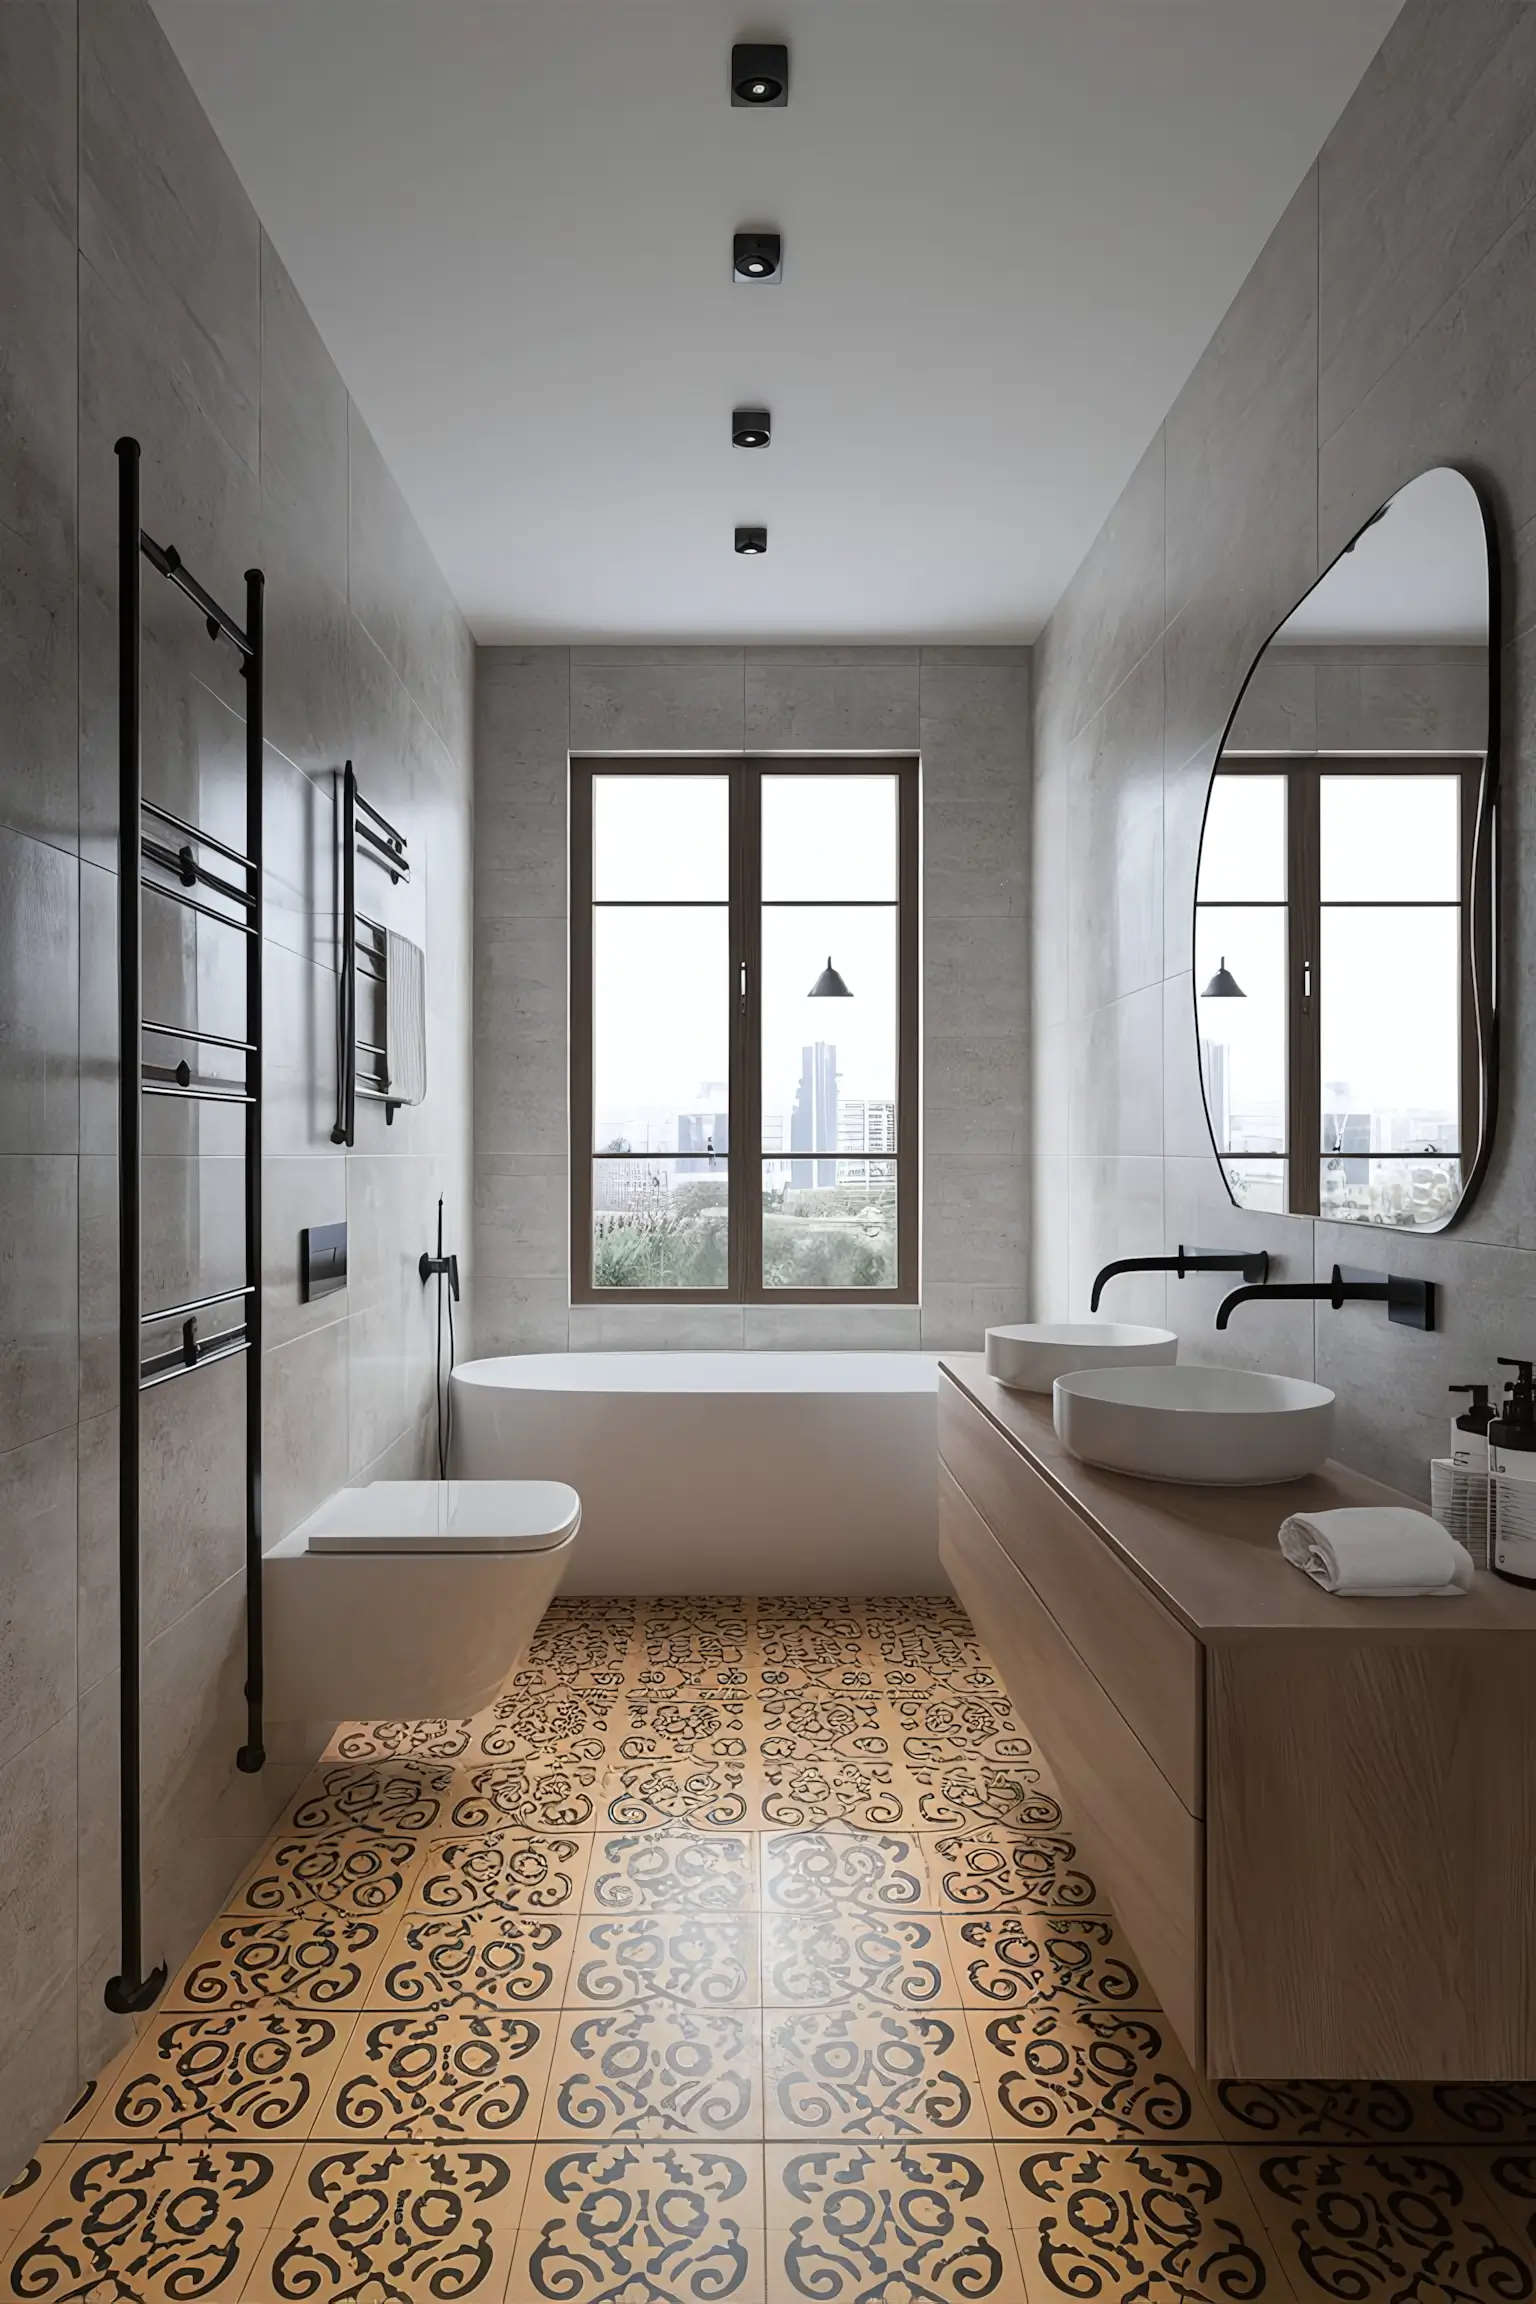 Master bathroom with luxurious floor tiles in stunning designs.